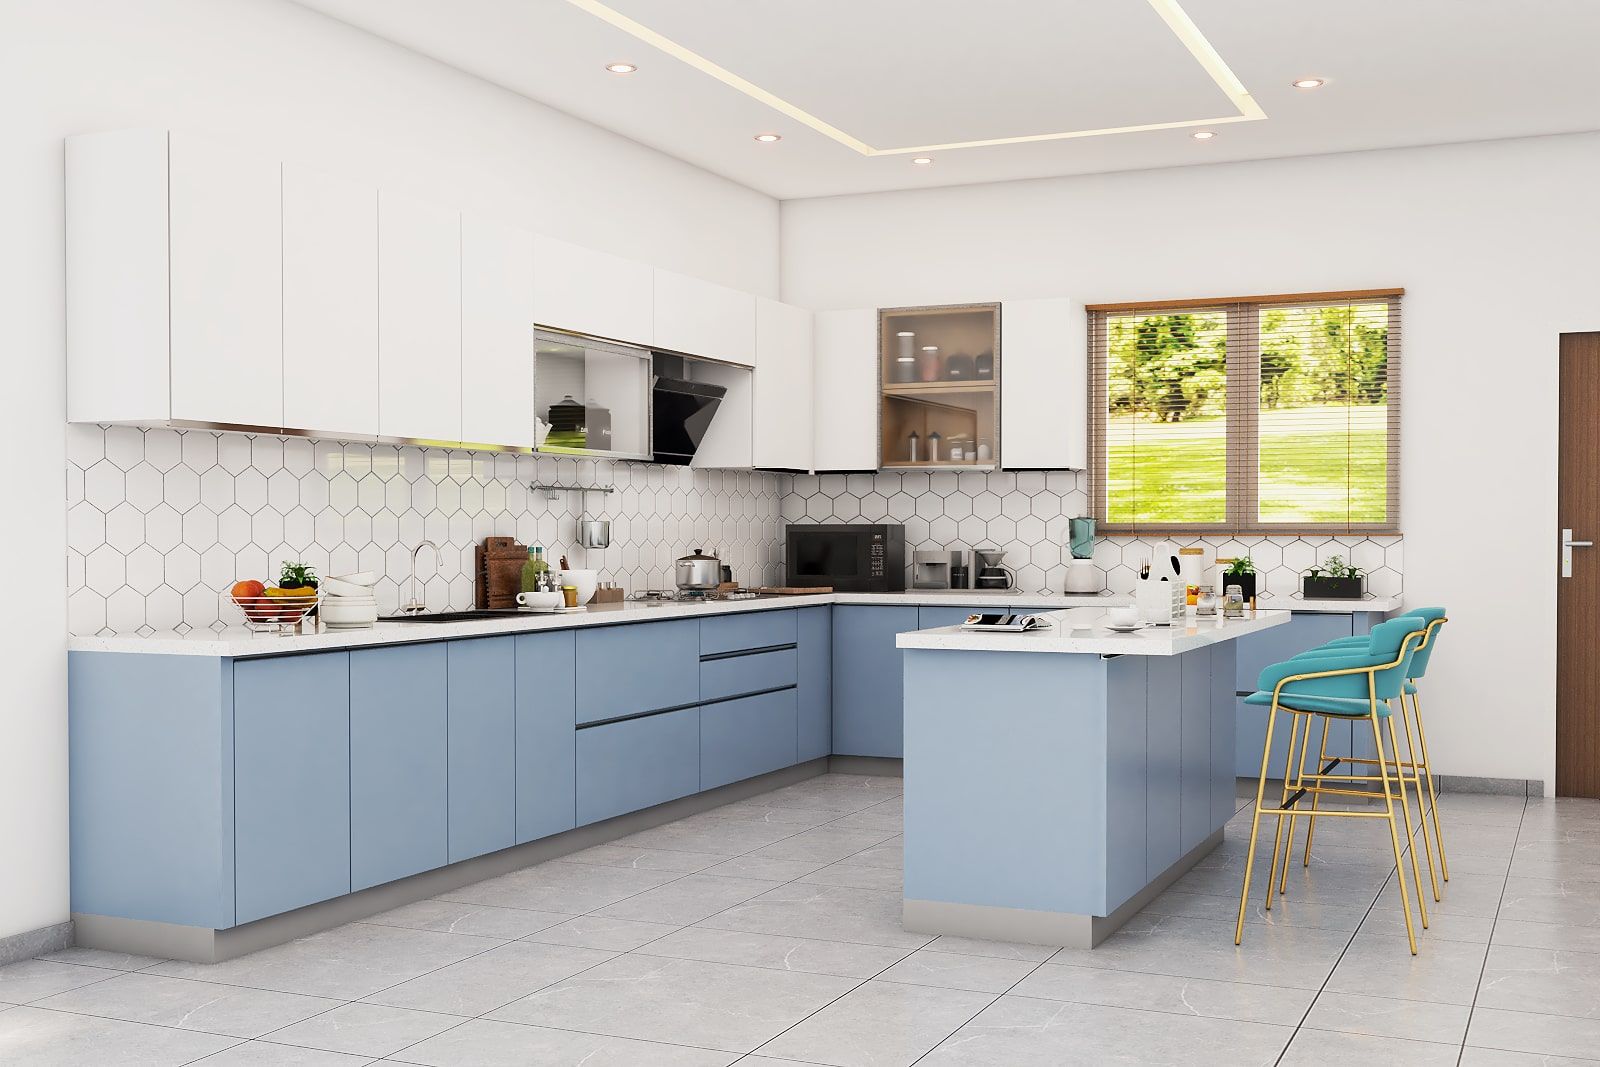 Modern Open Kitchen Design In Blue And White